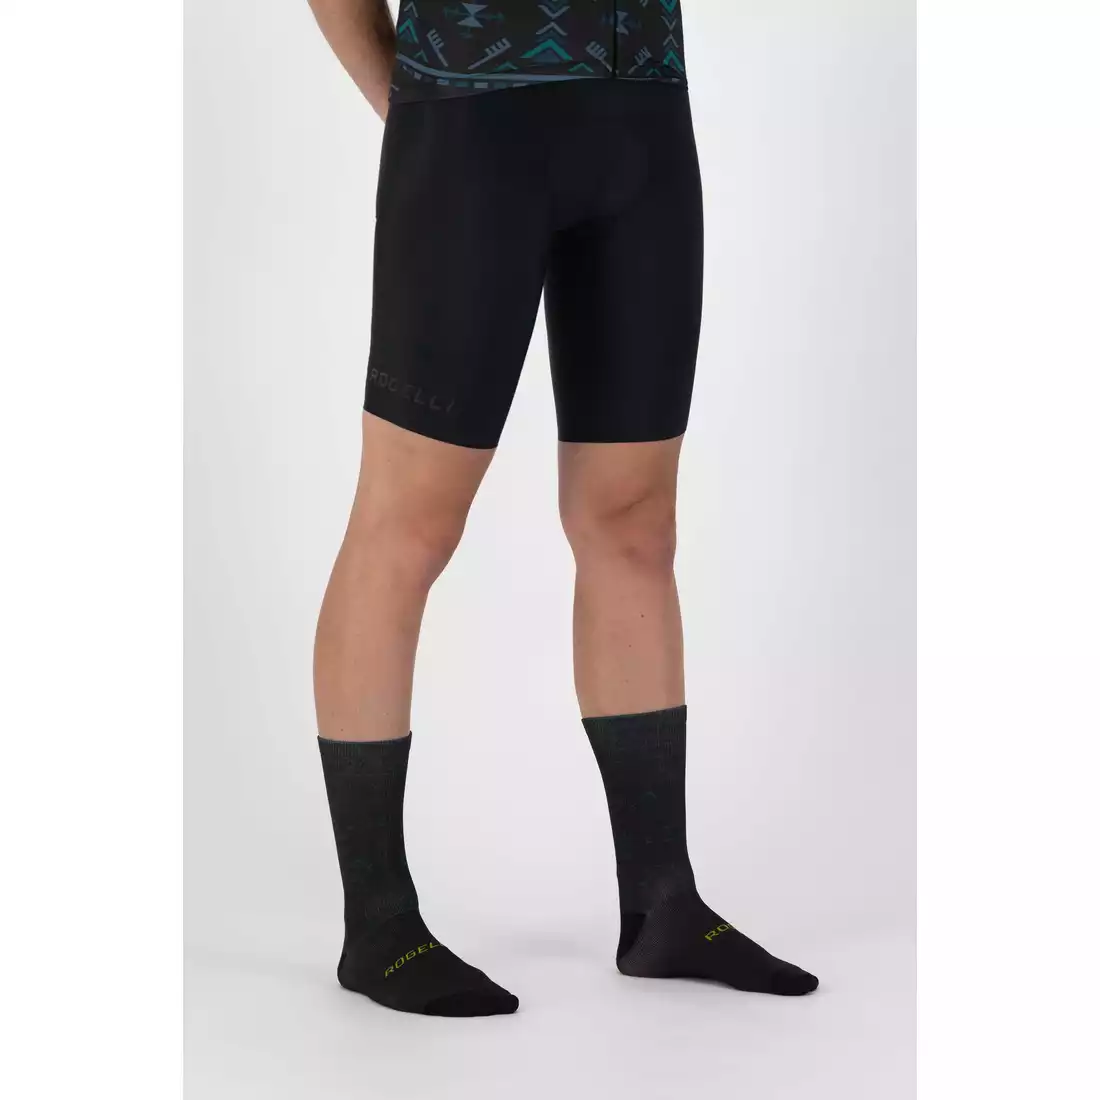 ROGELLI AZTEC Cycling socks, black